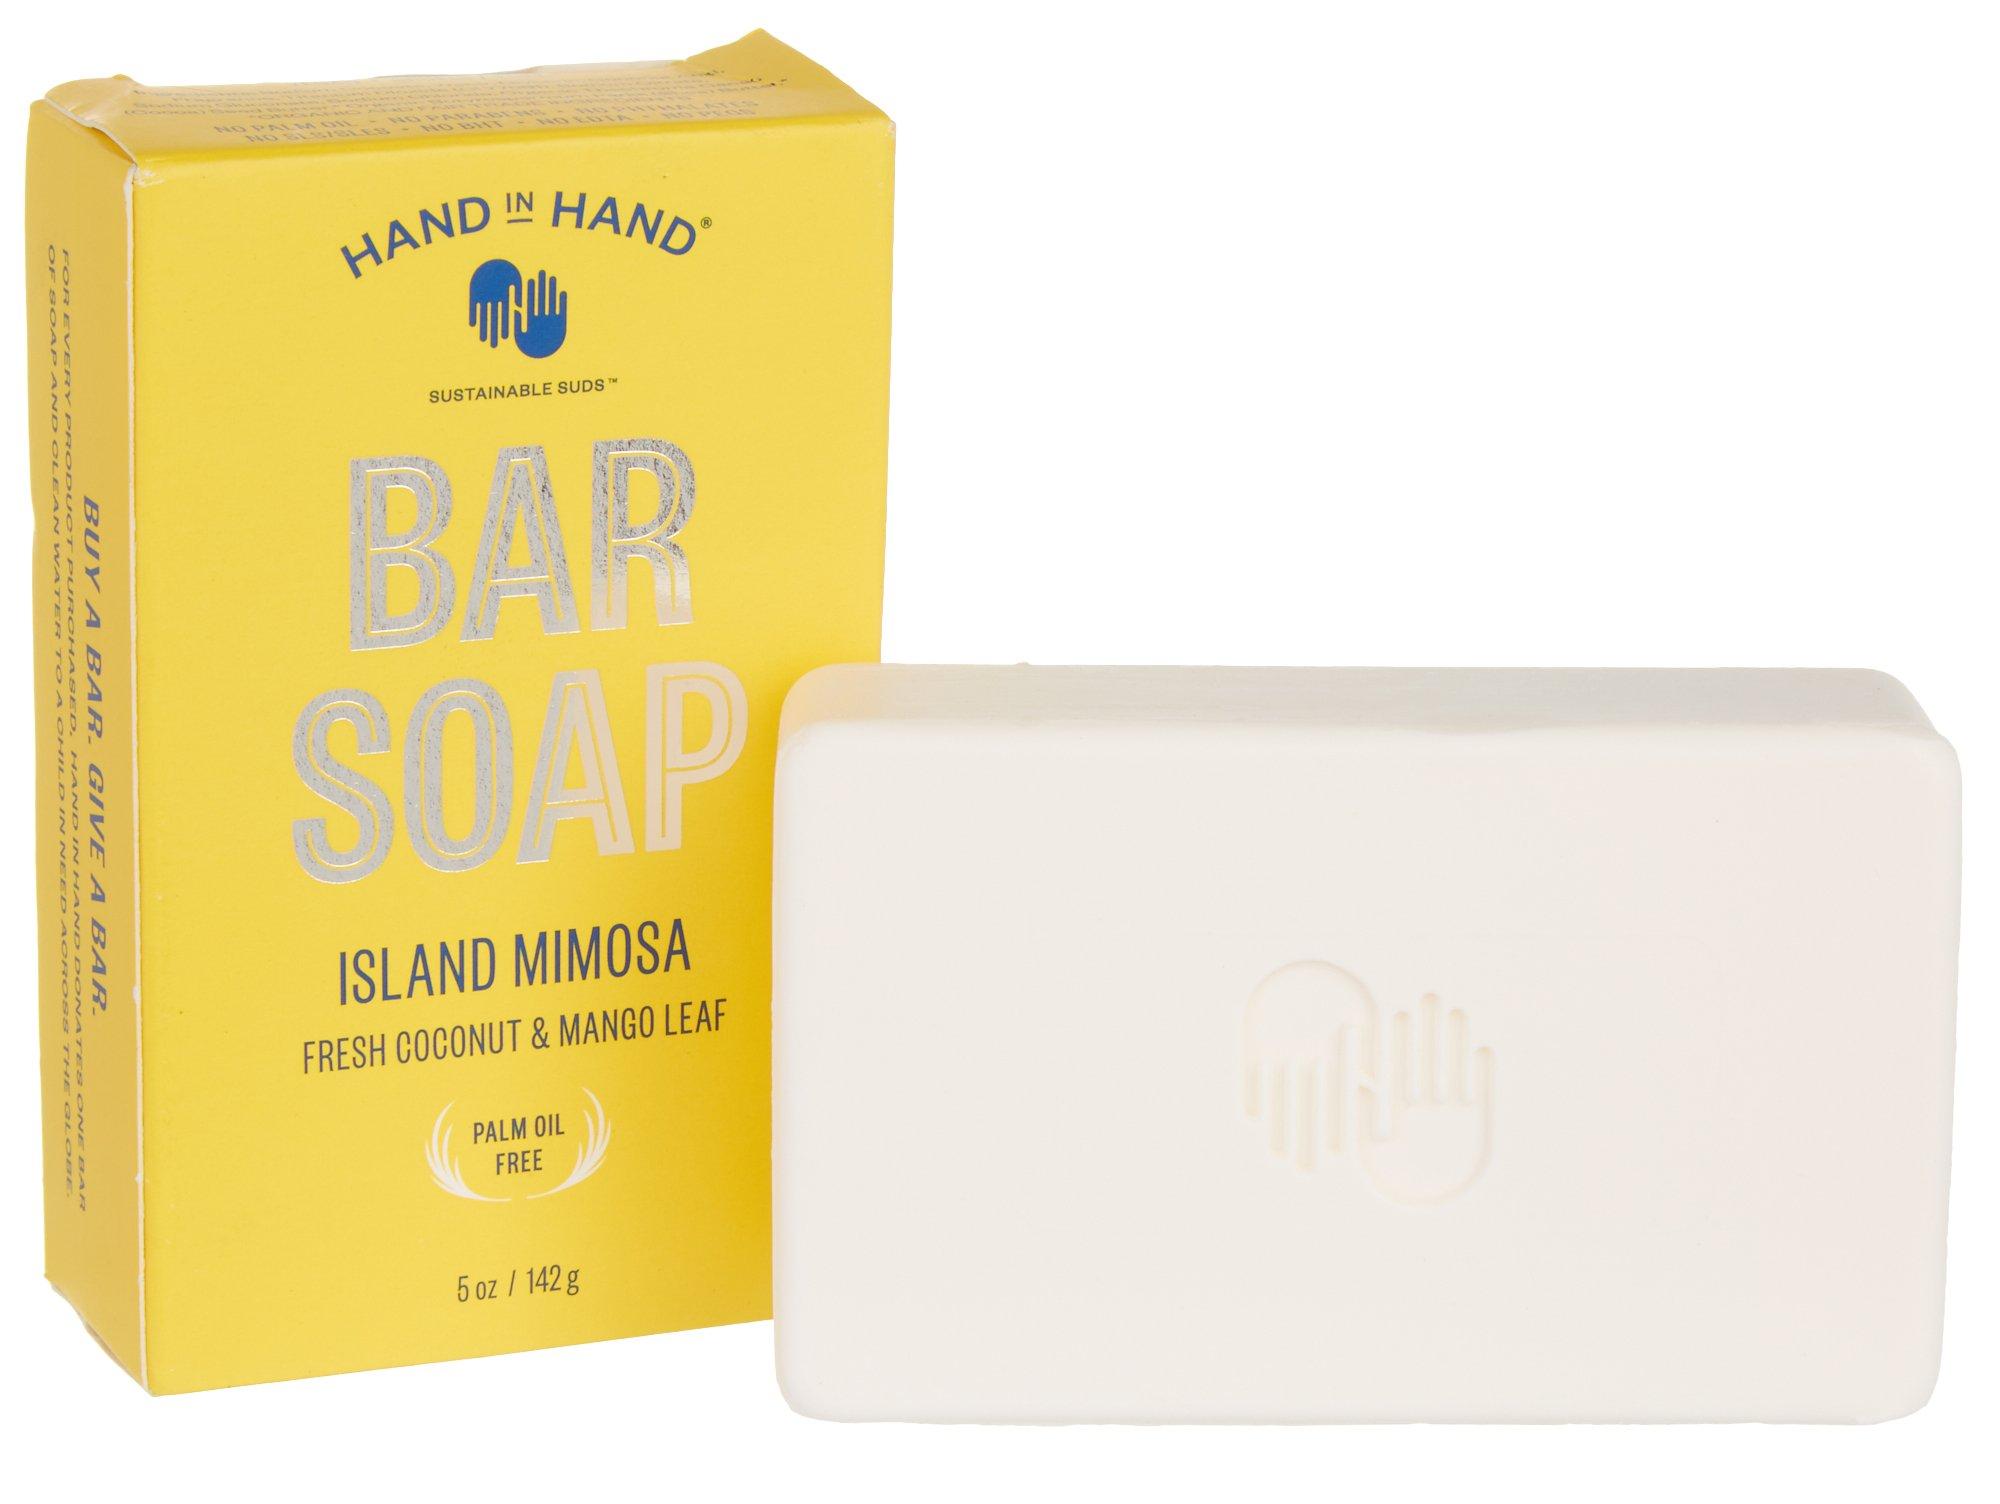 Hand In Hand Island Mimosa Bar Soap 5 Oz.